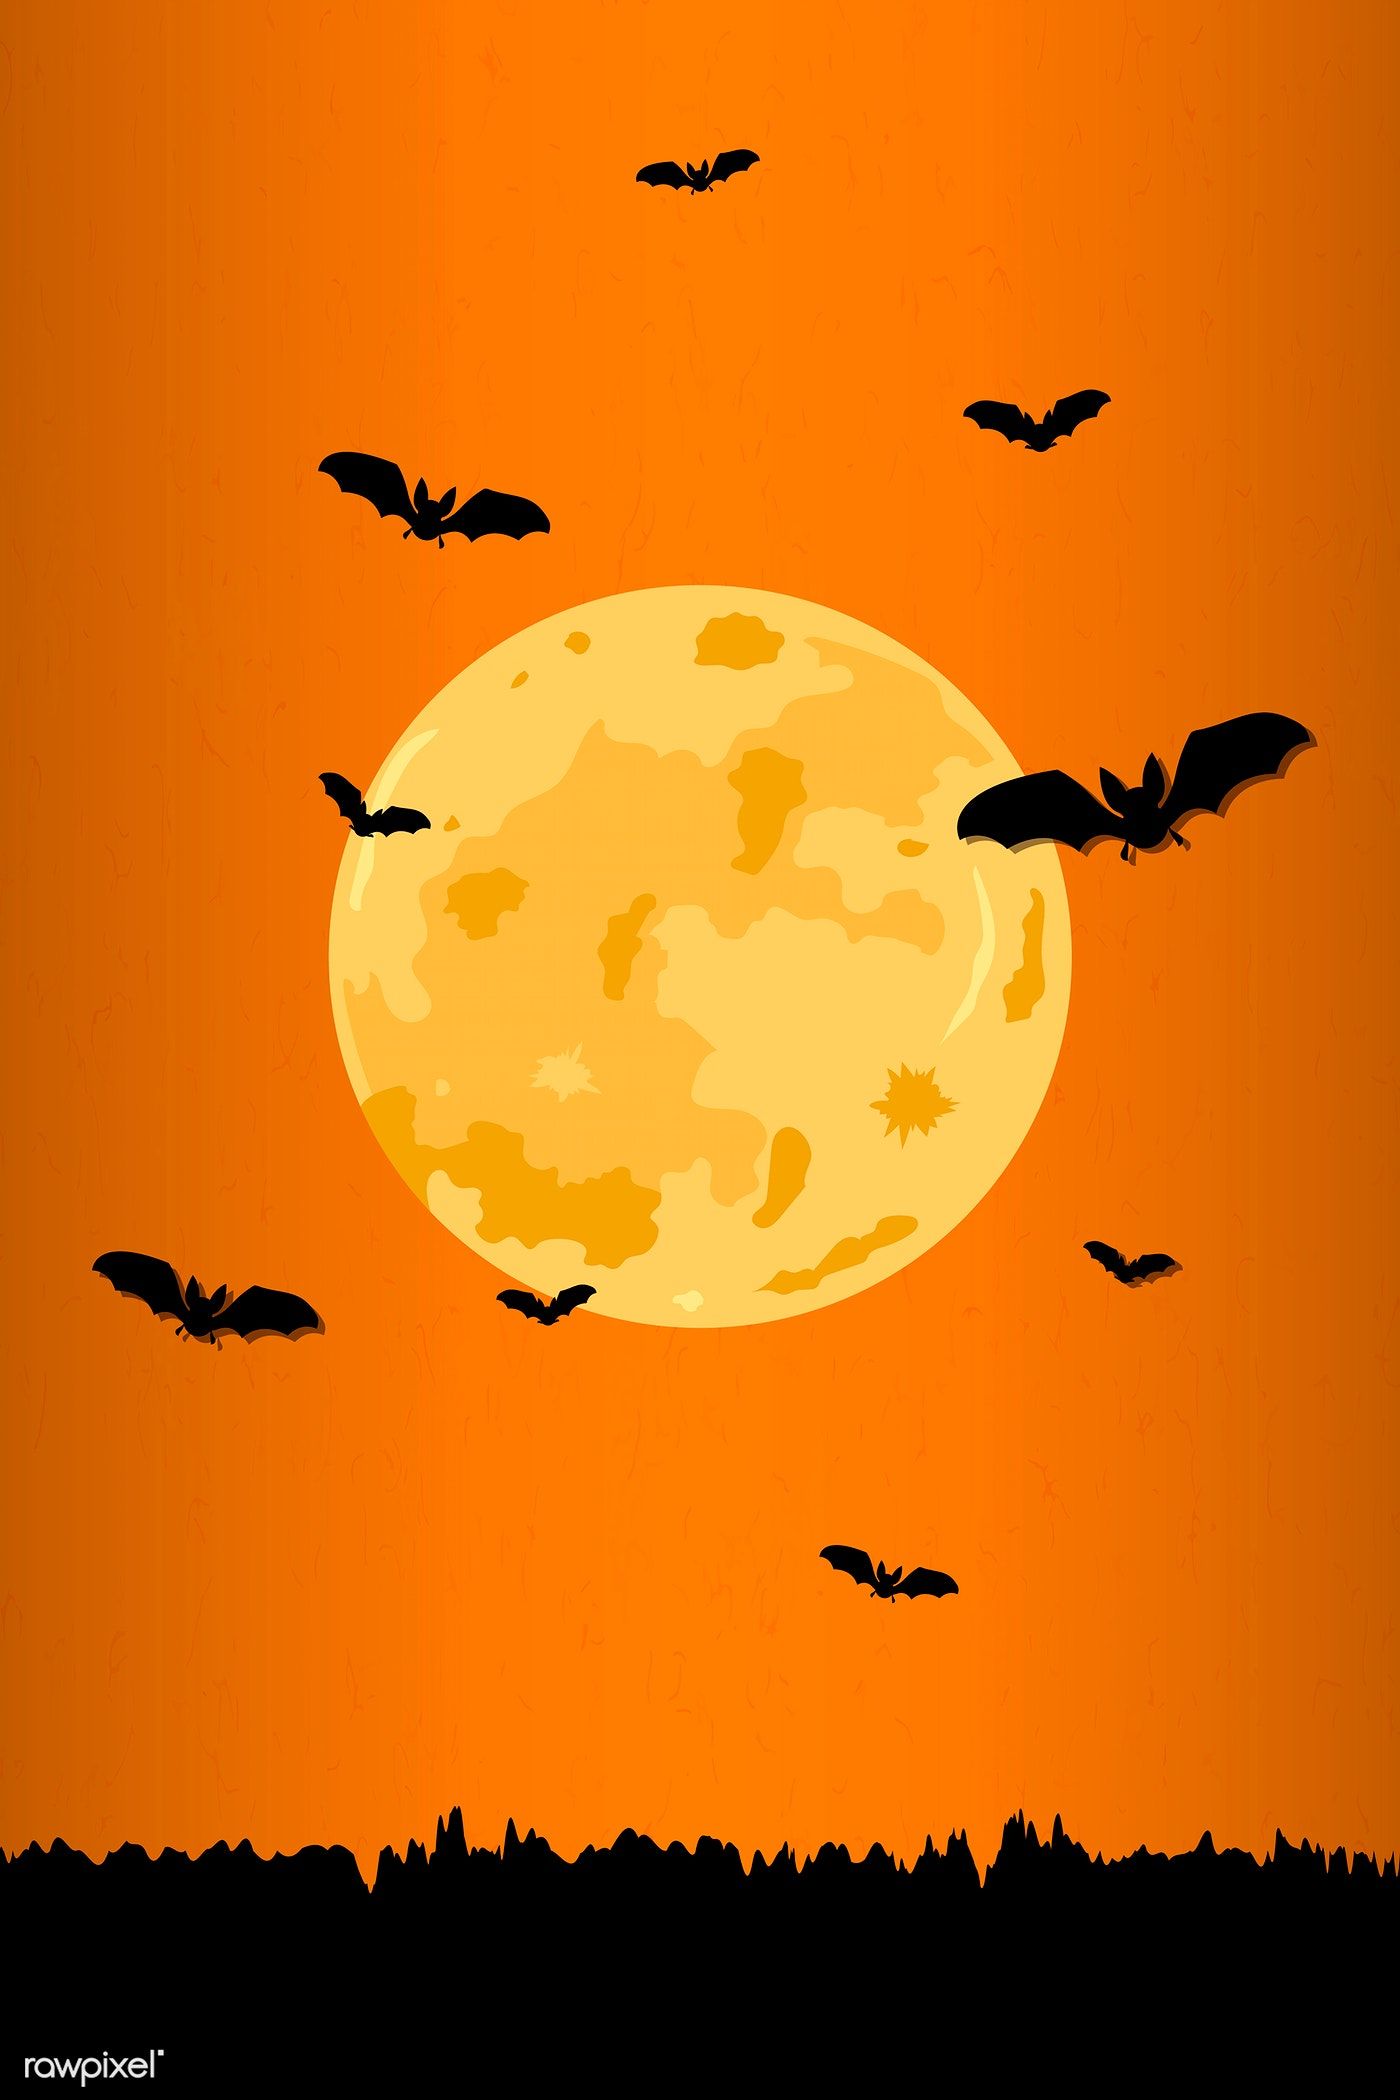 Full moon pattern on orange Halloween background vector. free image by rawpixel.com / Aew. Halloween illustration, Halloween background, Moon pattern